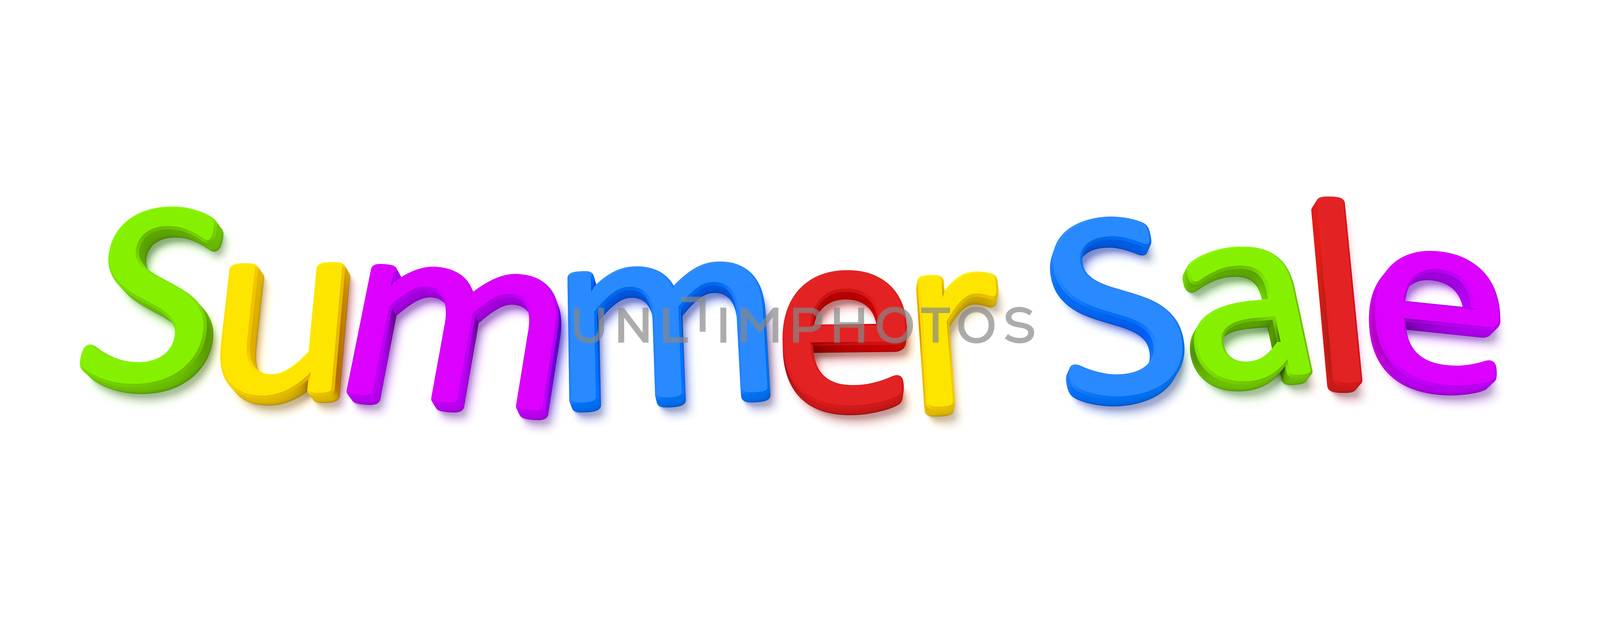 A colourful summer sale 3D image